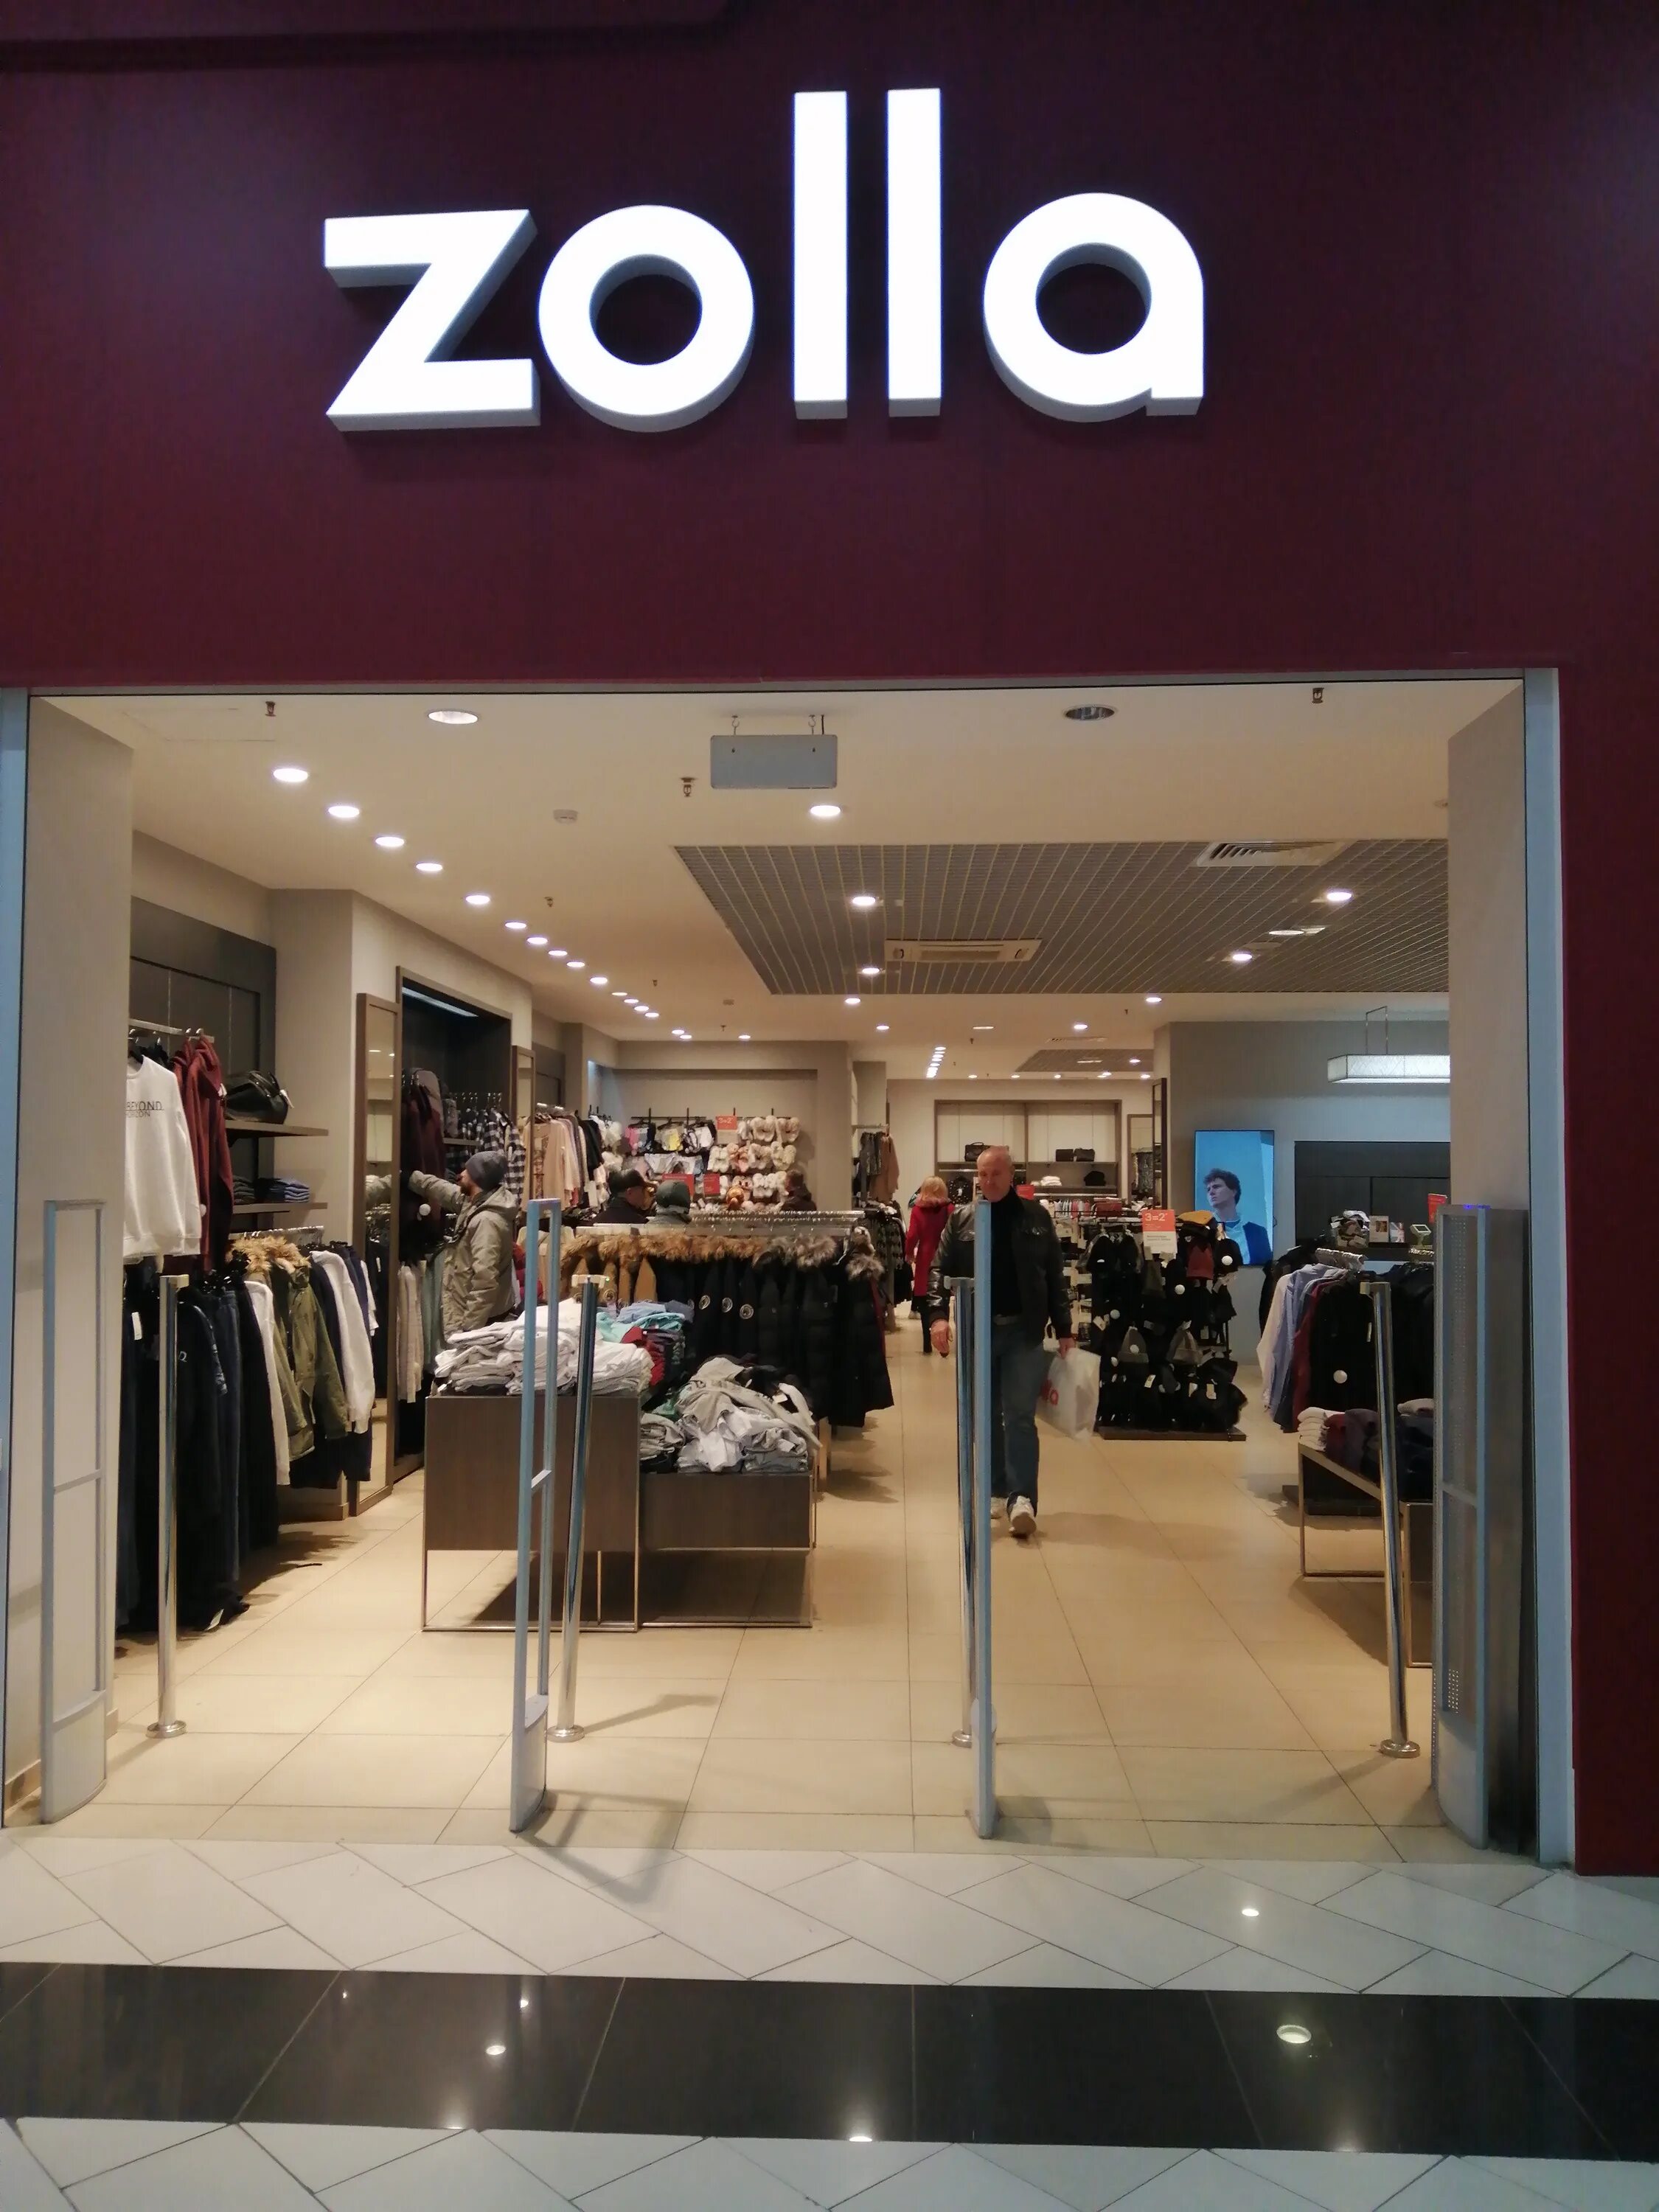 Zolla. Зола магазин. Магазин одежды Золла. Zolla логотип. Кирова 6 йошкар ола